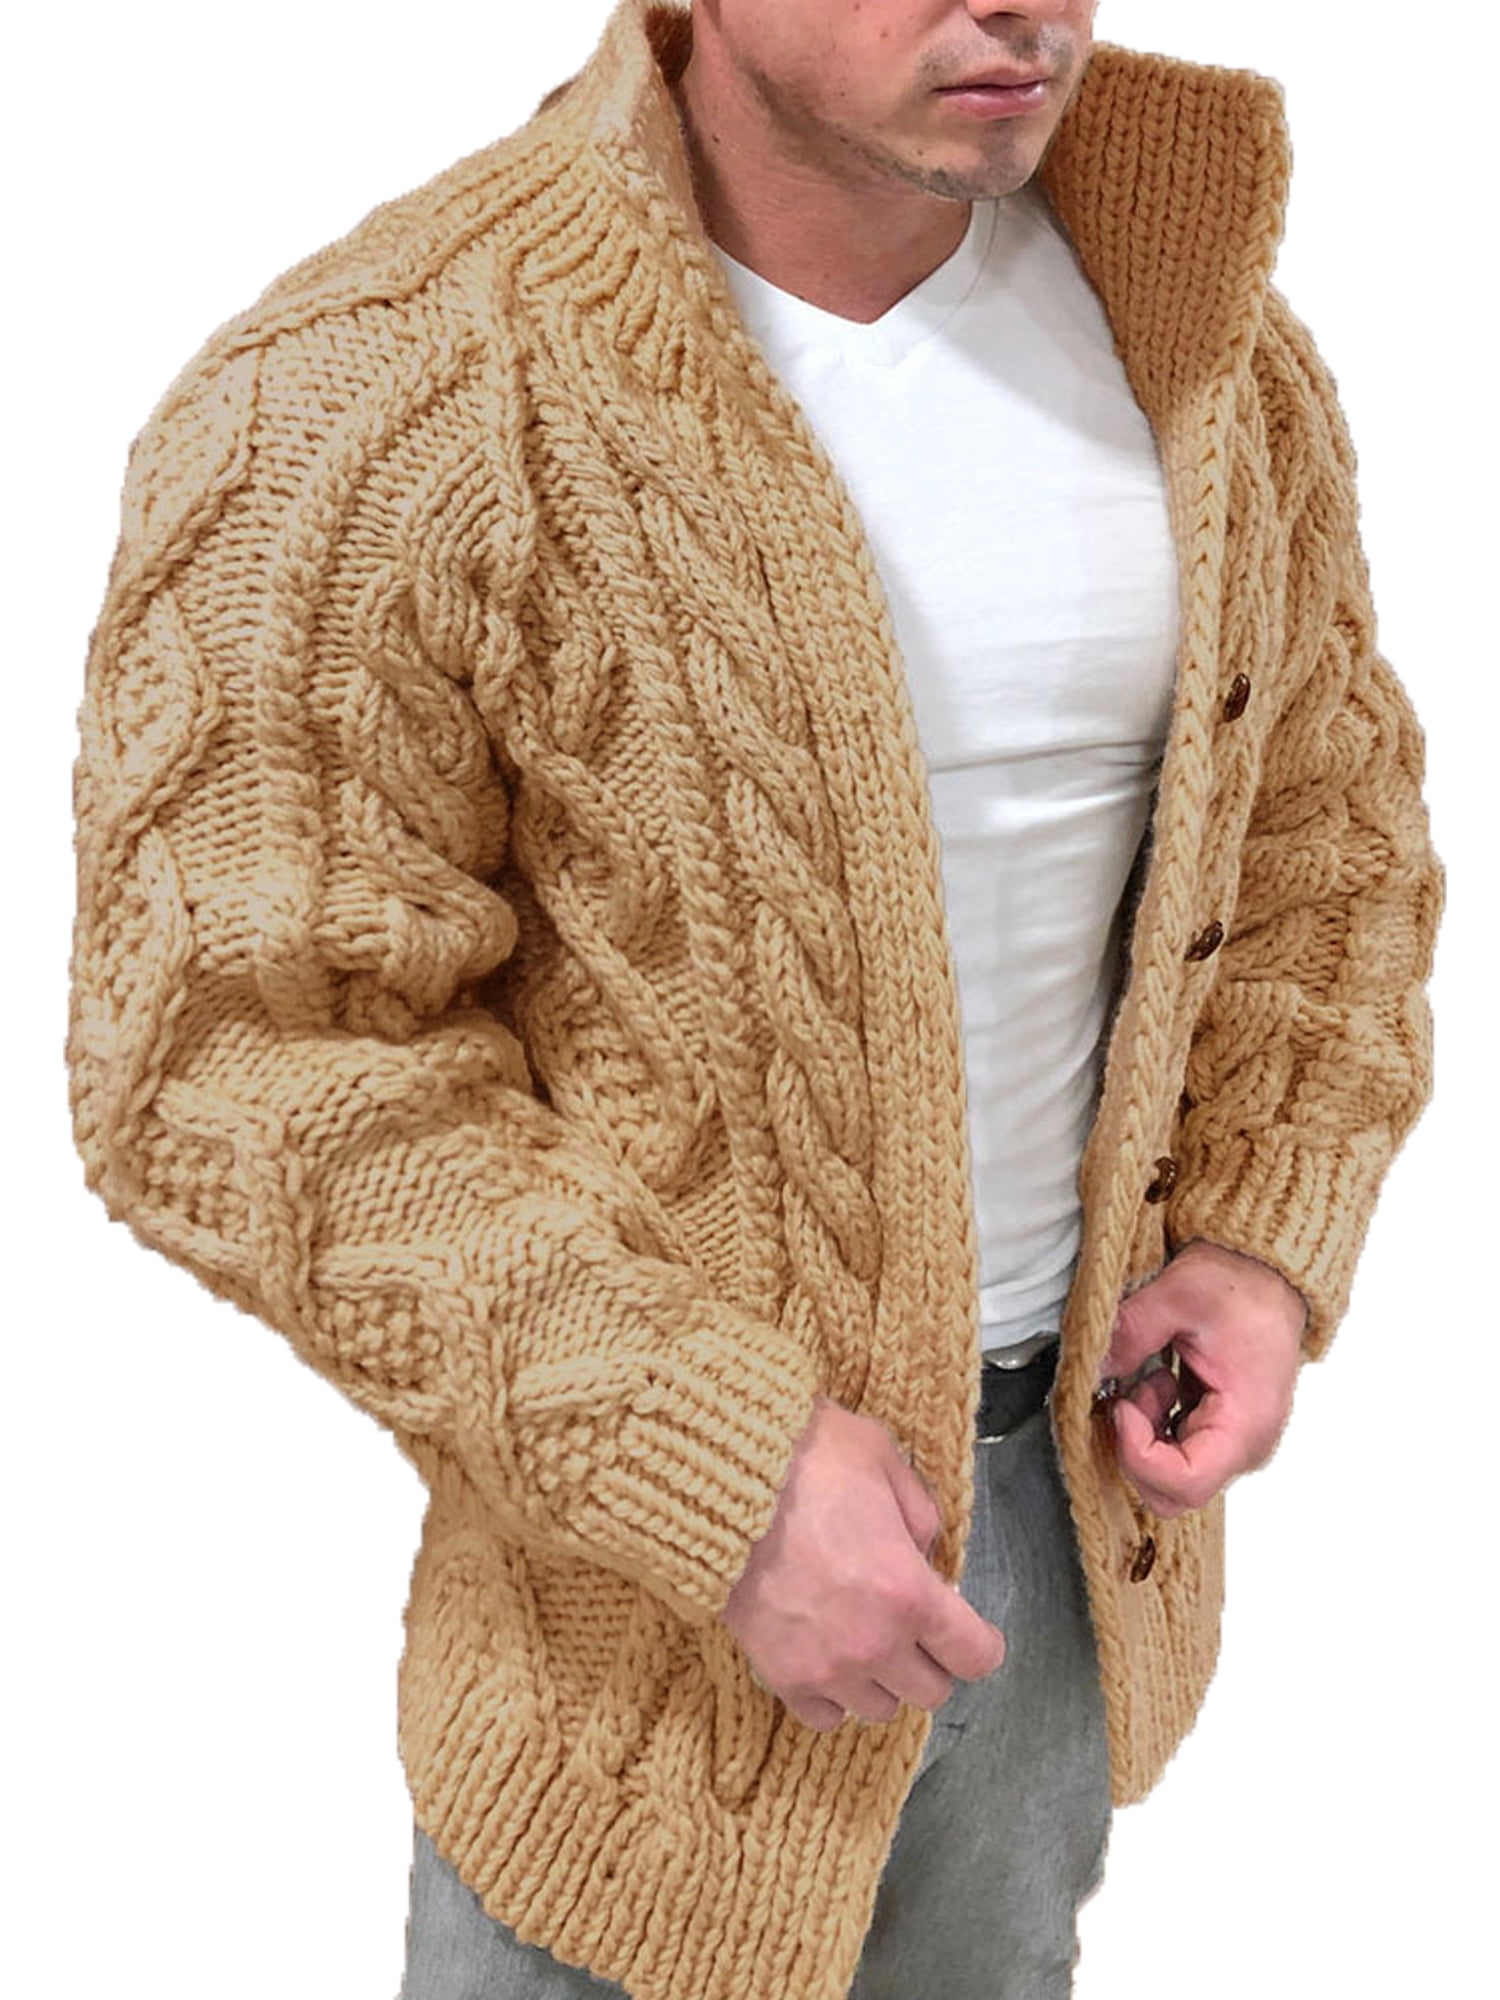 Hot Men's Casual Slim Fit Knit V-Neck Cardigan Stylish Sweater Coat Jacket Tops 